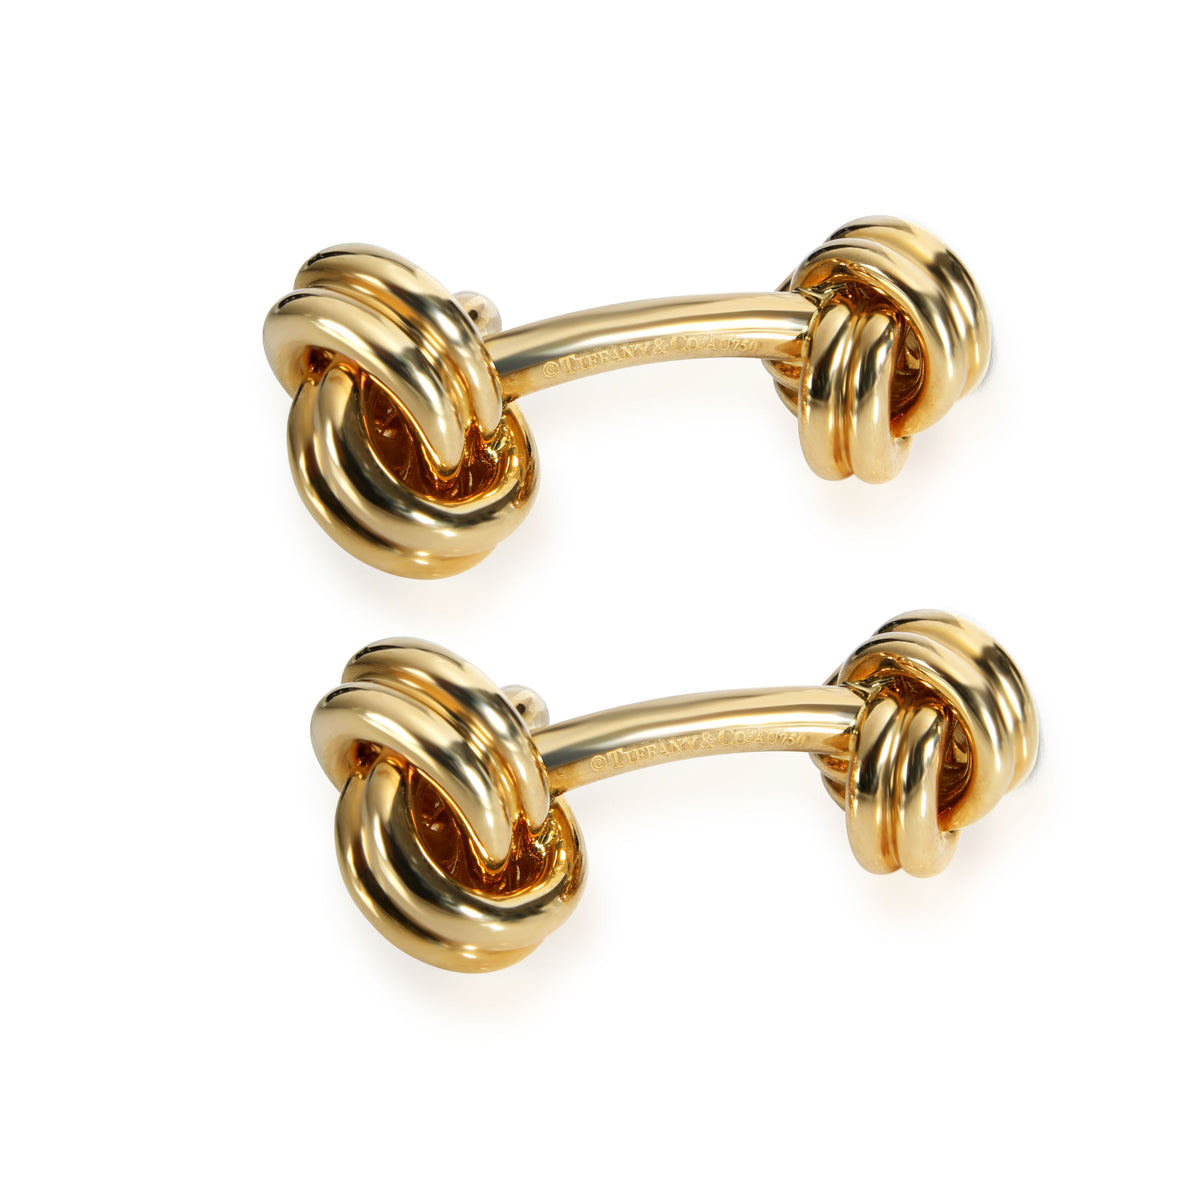 Tiffany & Co. Knot Cufflinks in 18K Yellow Gold